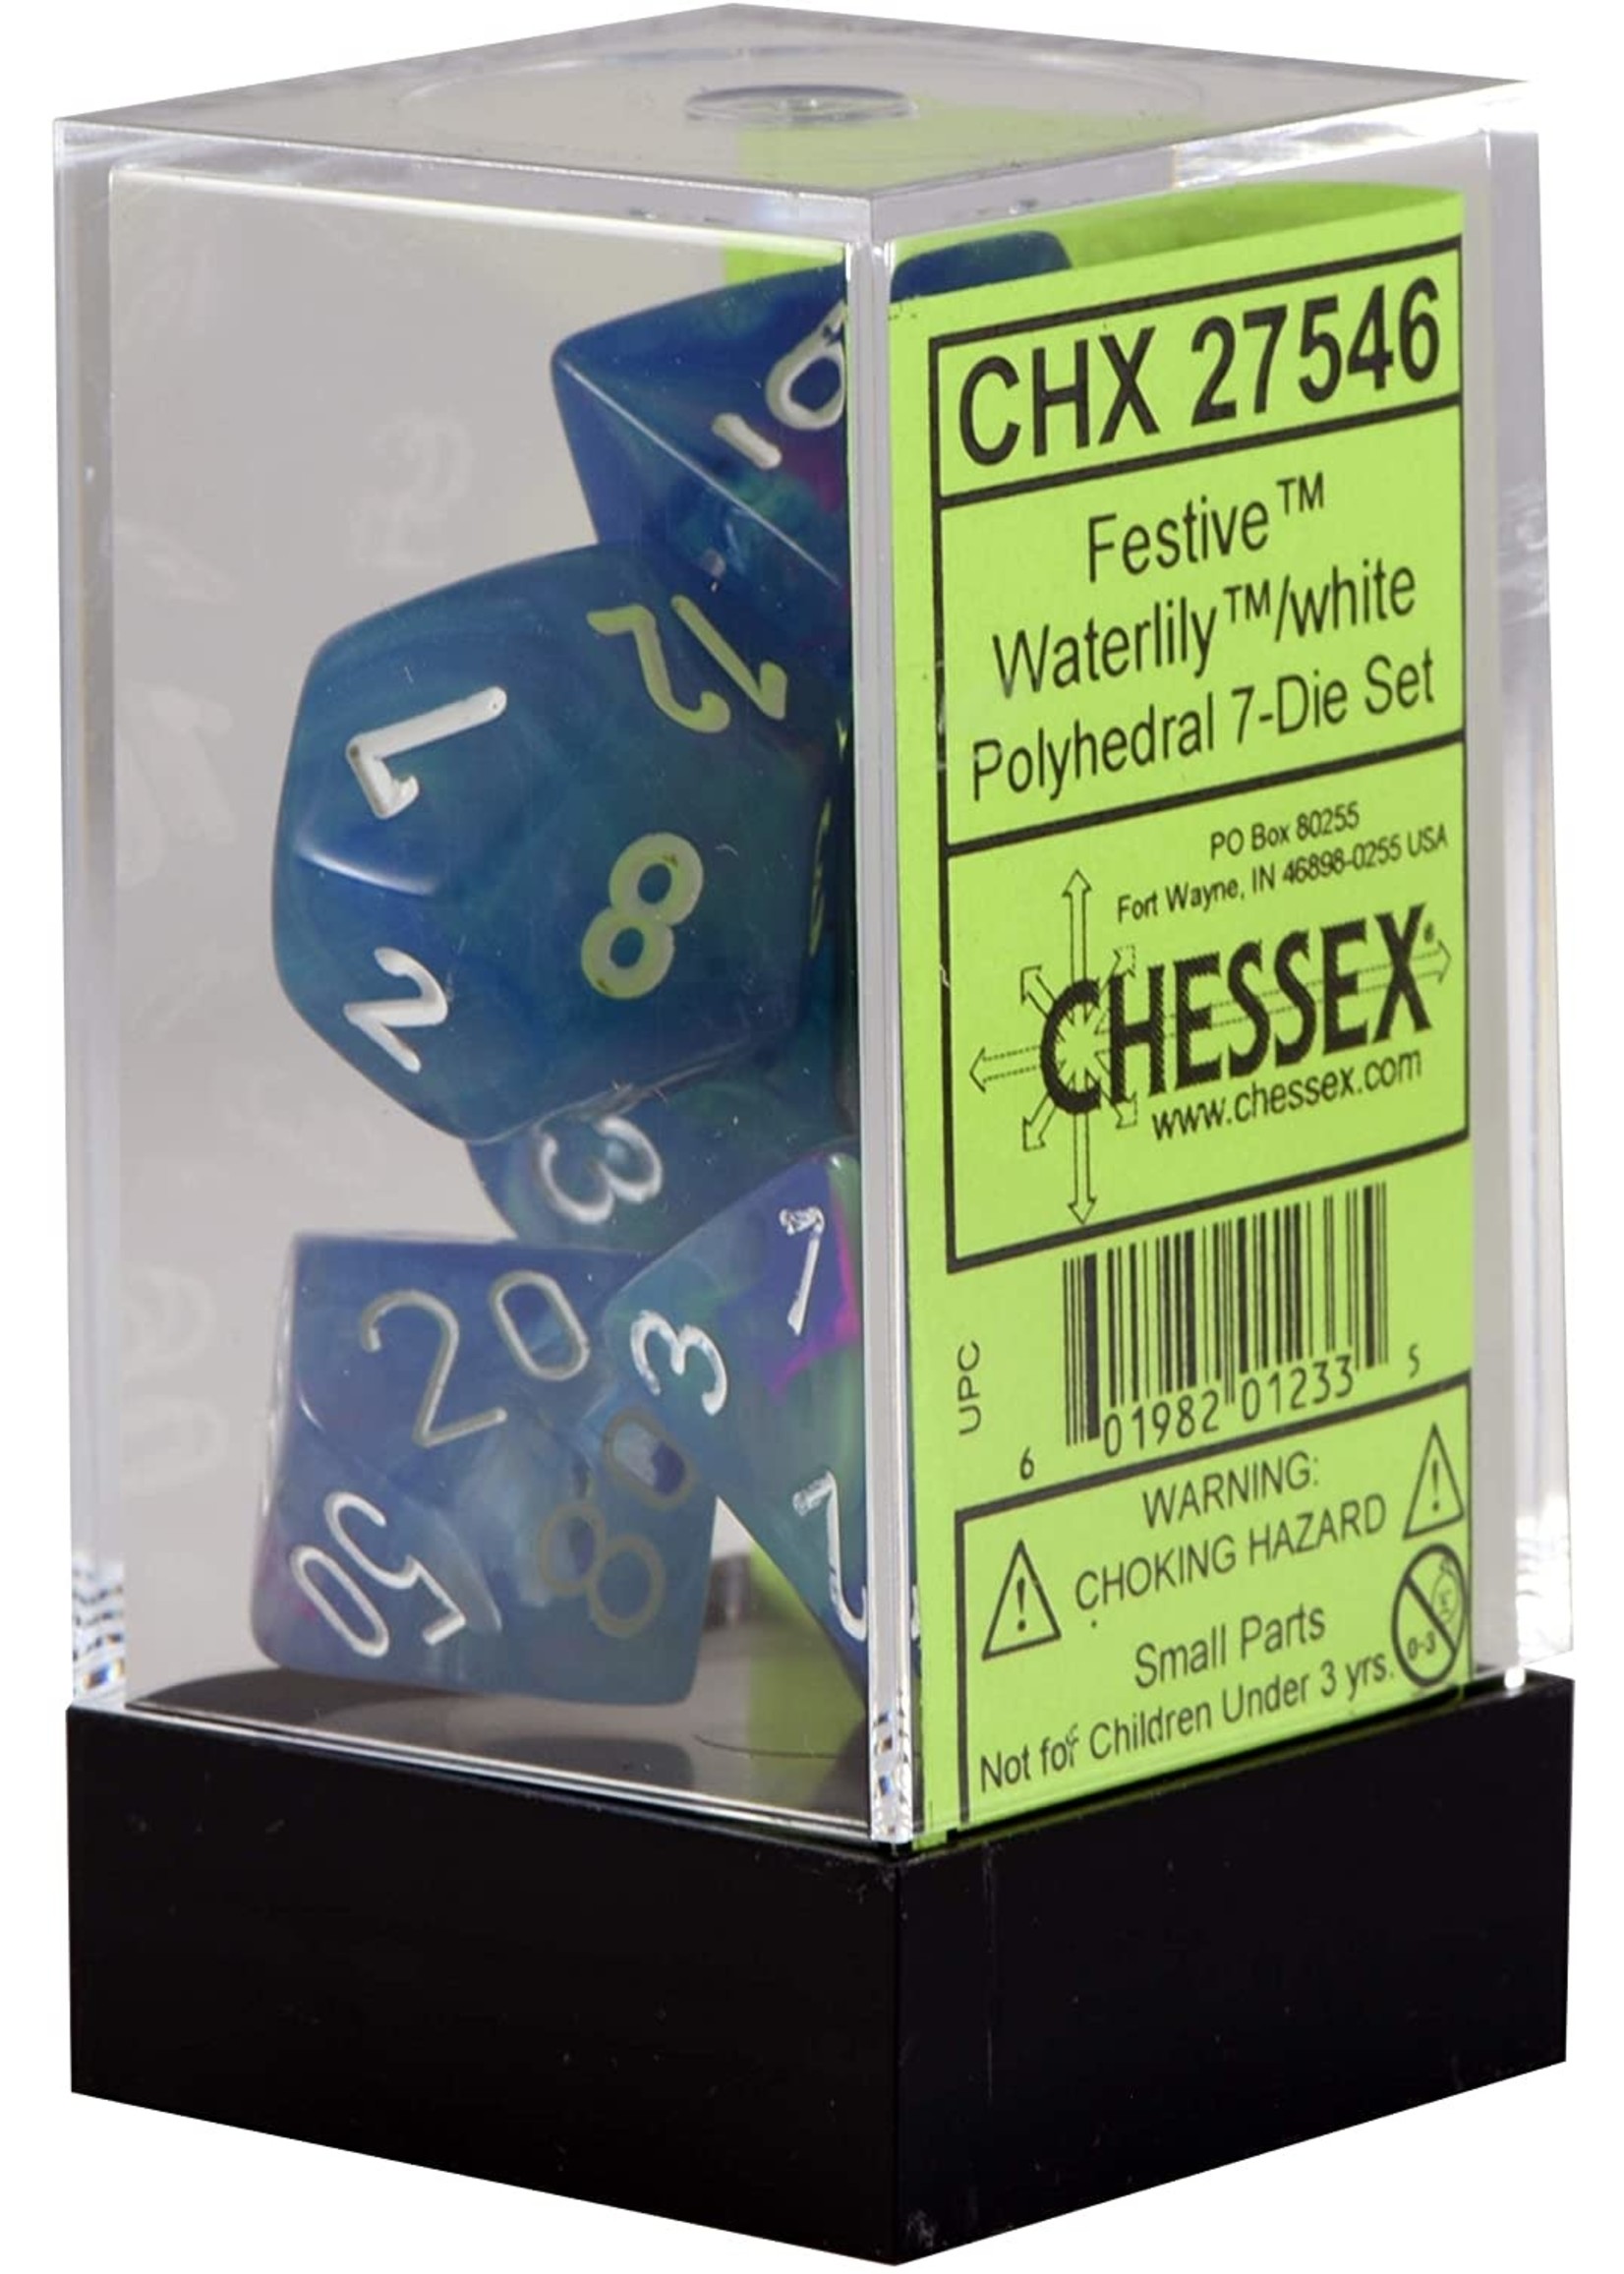 Chessex Festive Poly 7 set: Waterlily w/ White